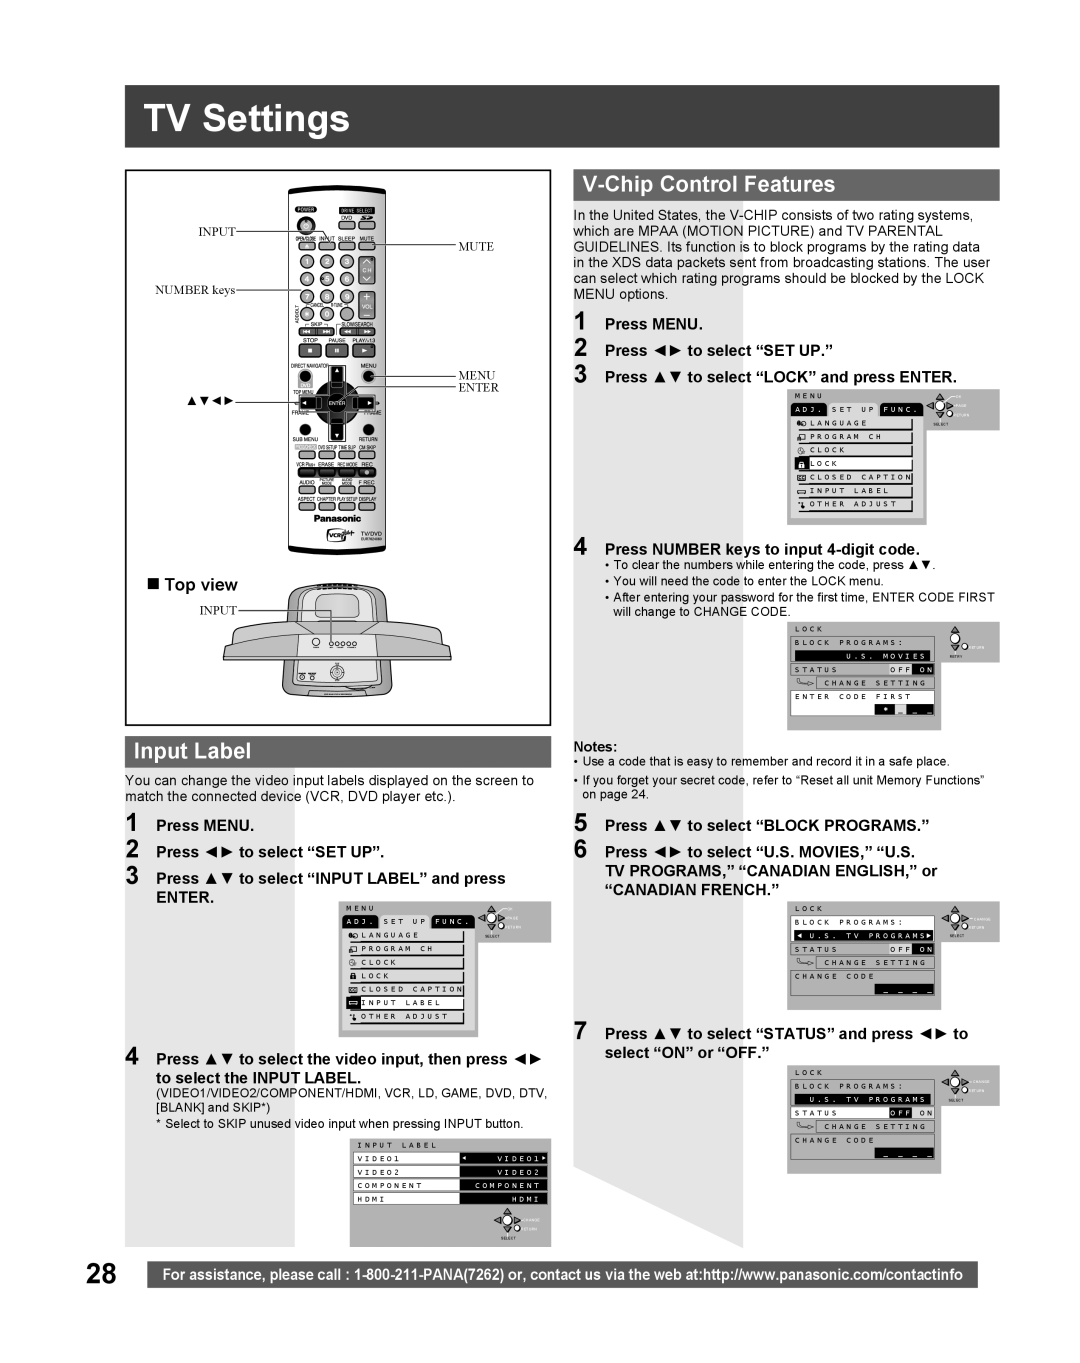 Panasonic TC 22LR30 TV Settings, Input Label, V-Chip Control Features, Top view, Press MENU, Press to select “SET UP” 